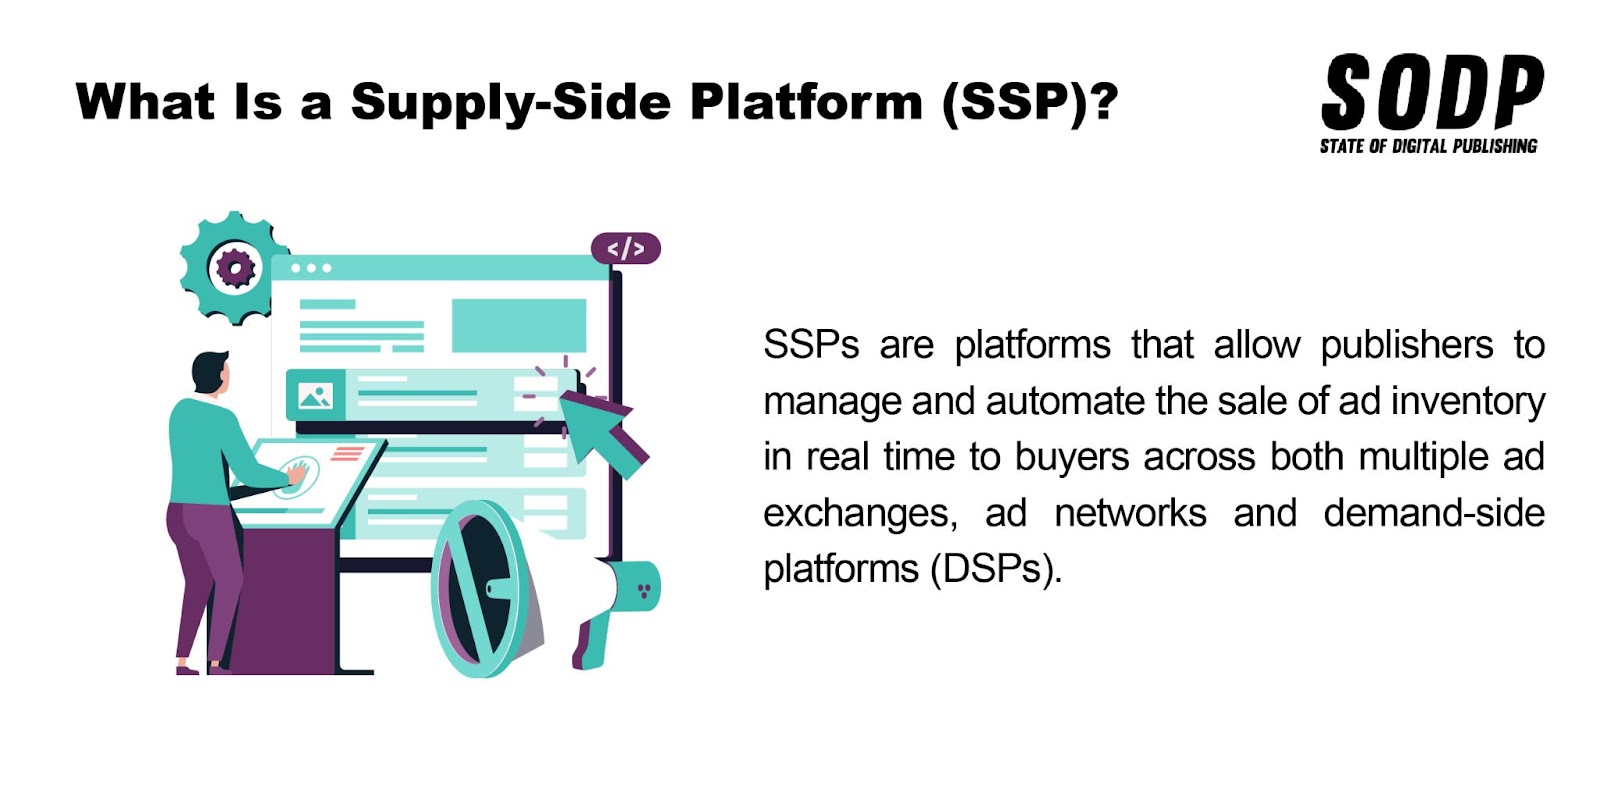 What Is a Supply-Side Platform (SSP)?